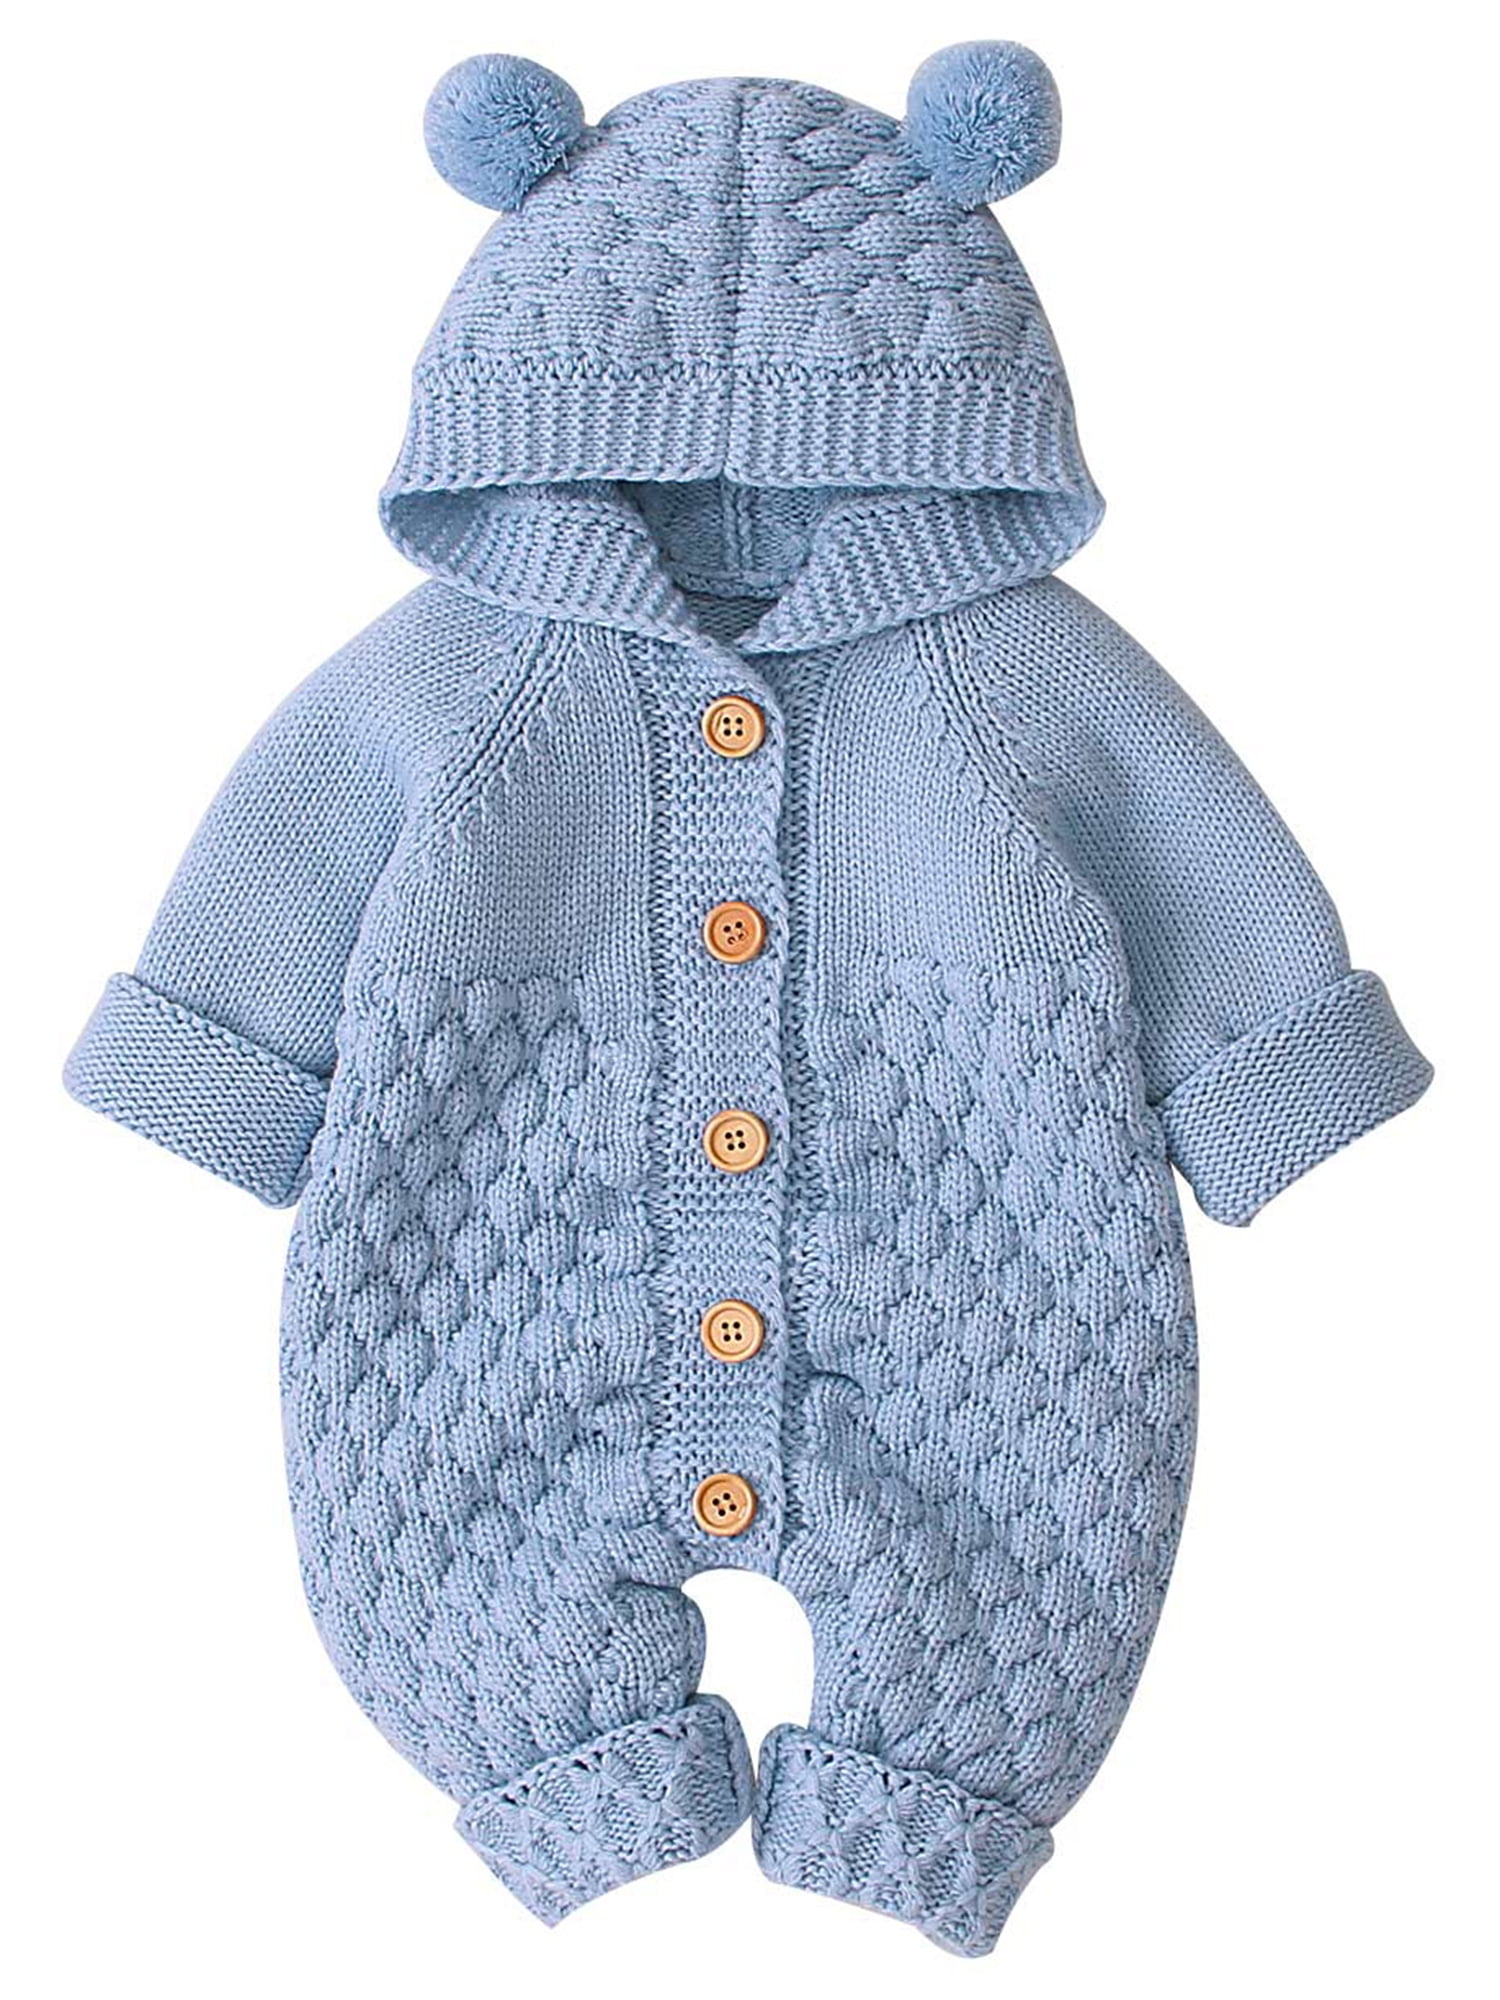 Winter Infant Newborn Baby Unisex Knit Romper Bodysuit Overalls Crochet Clothes 